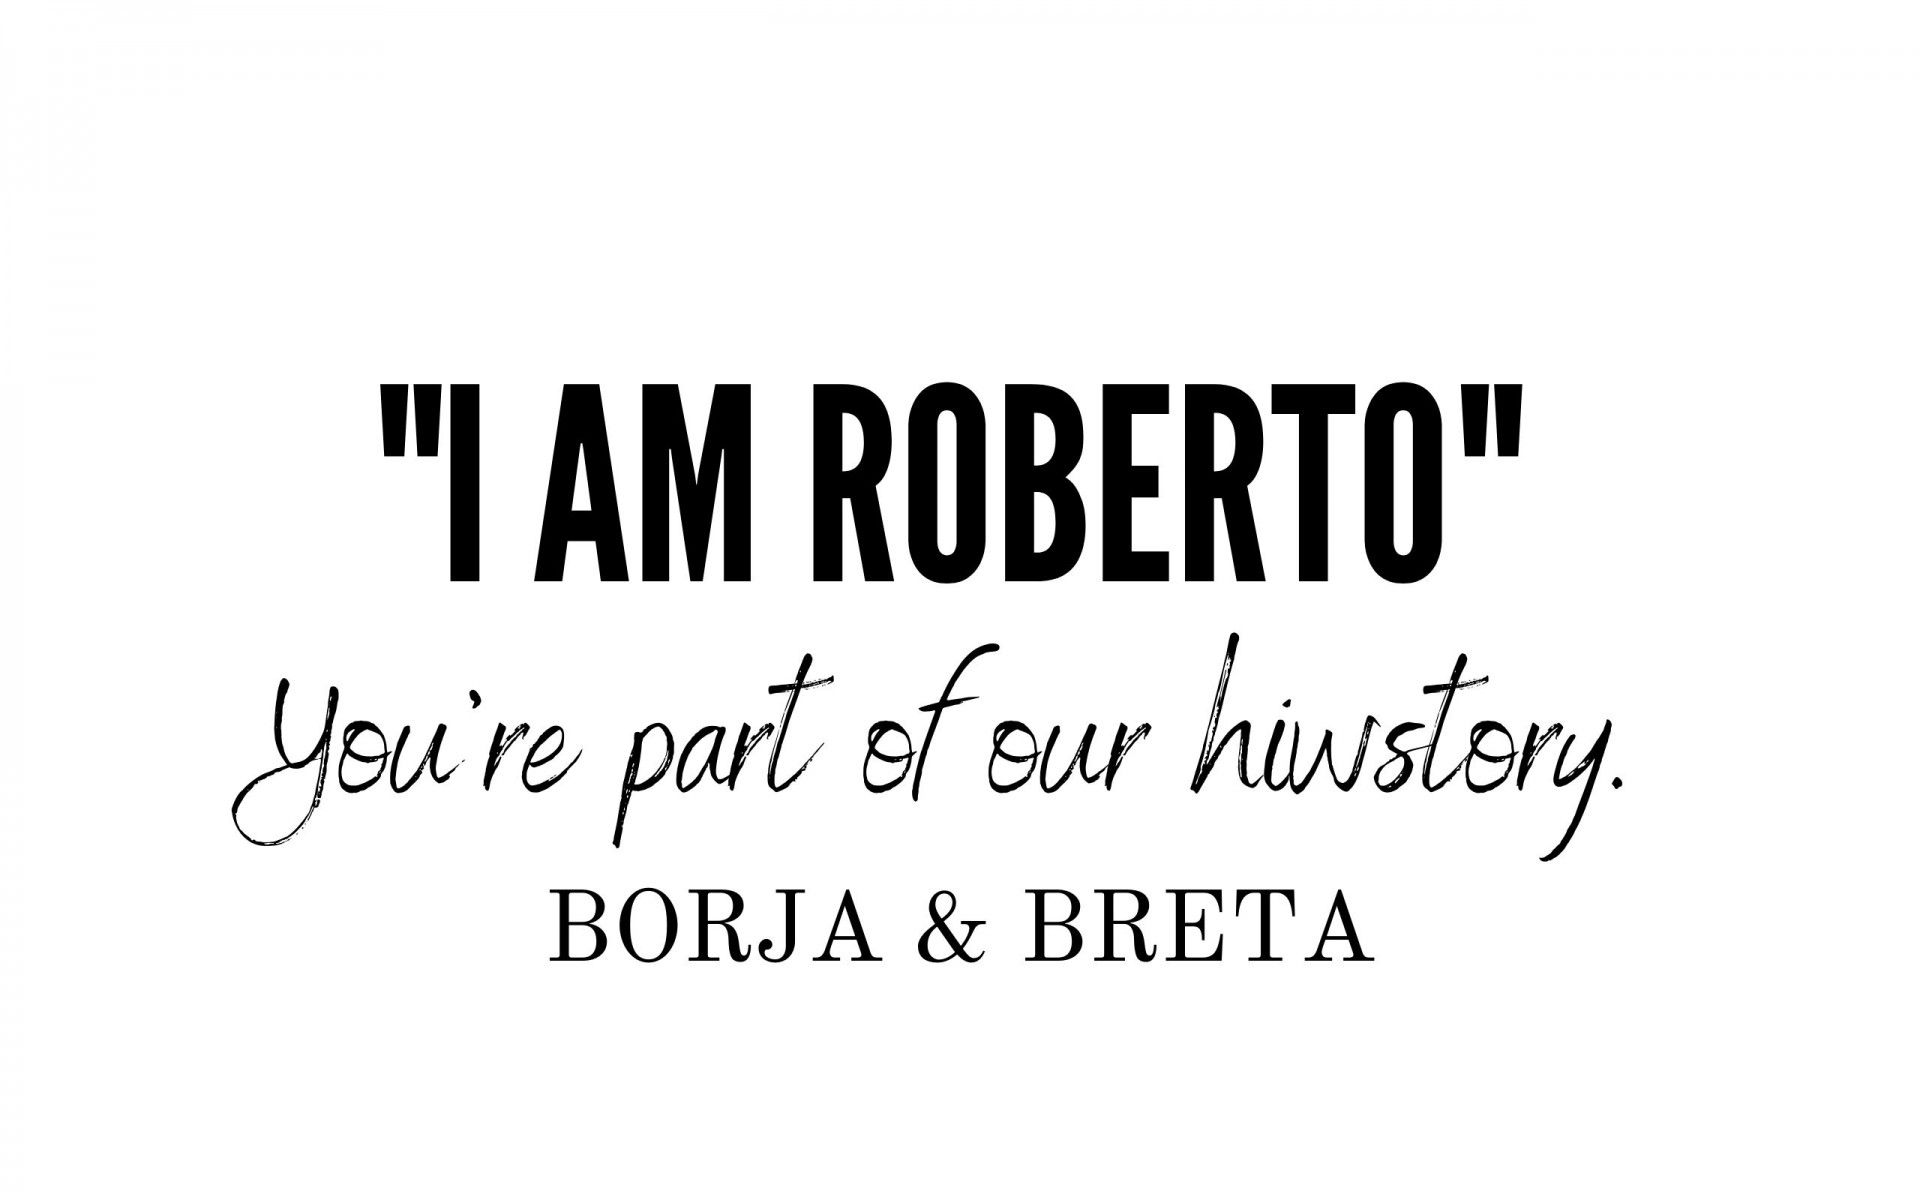 You are part of our history - Borja & Breta